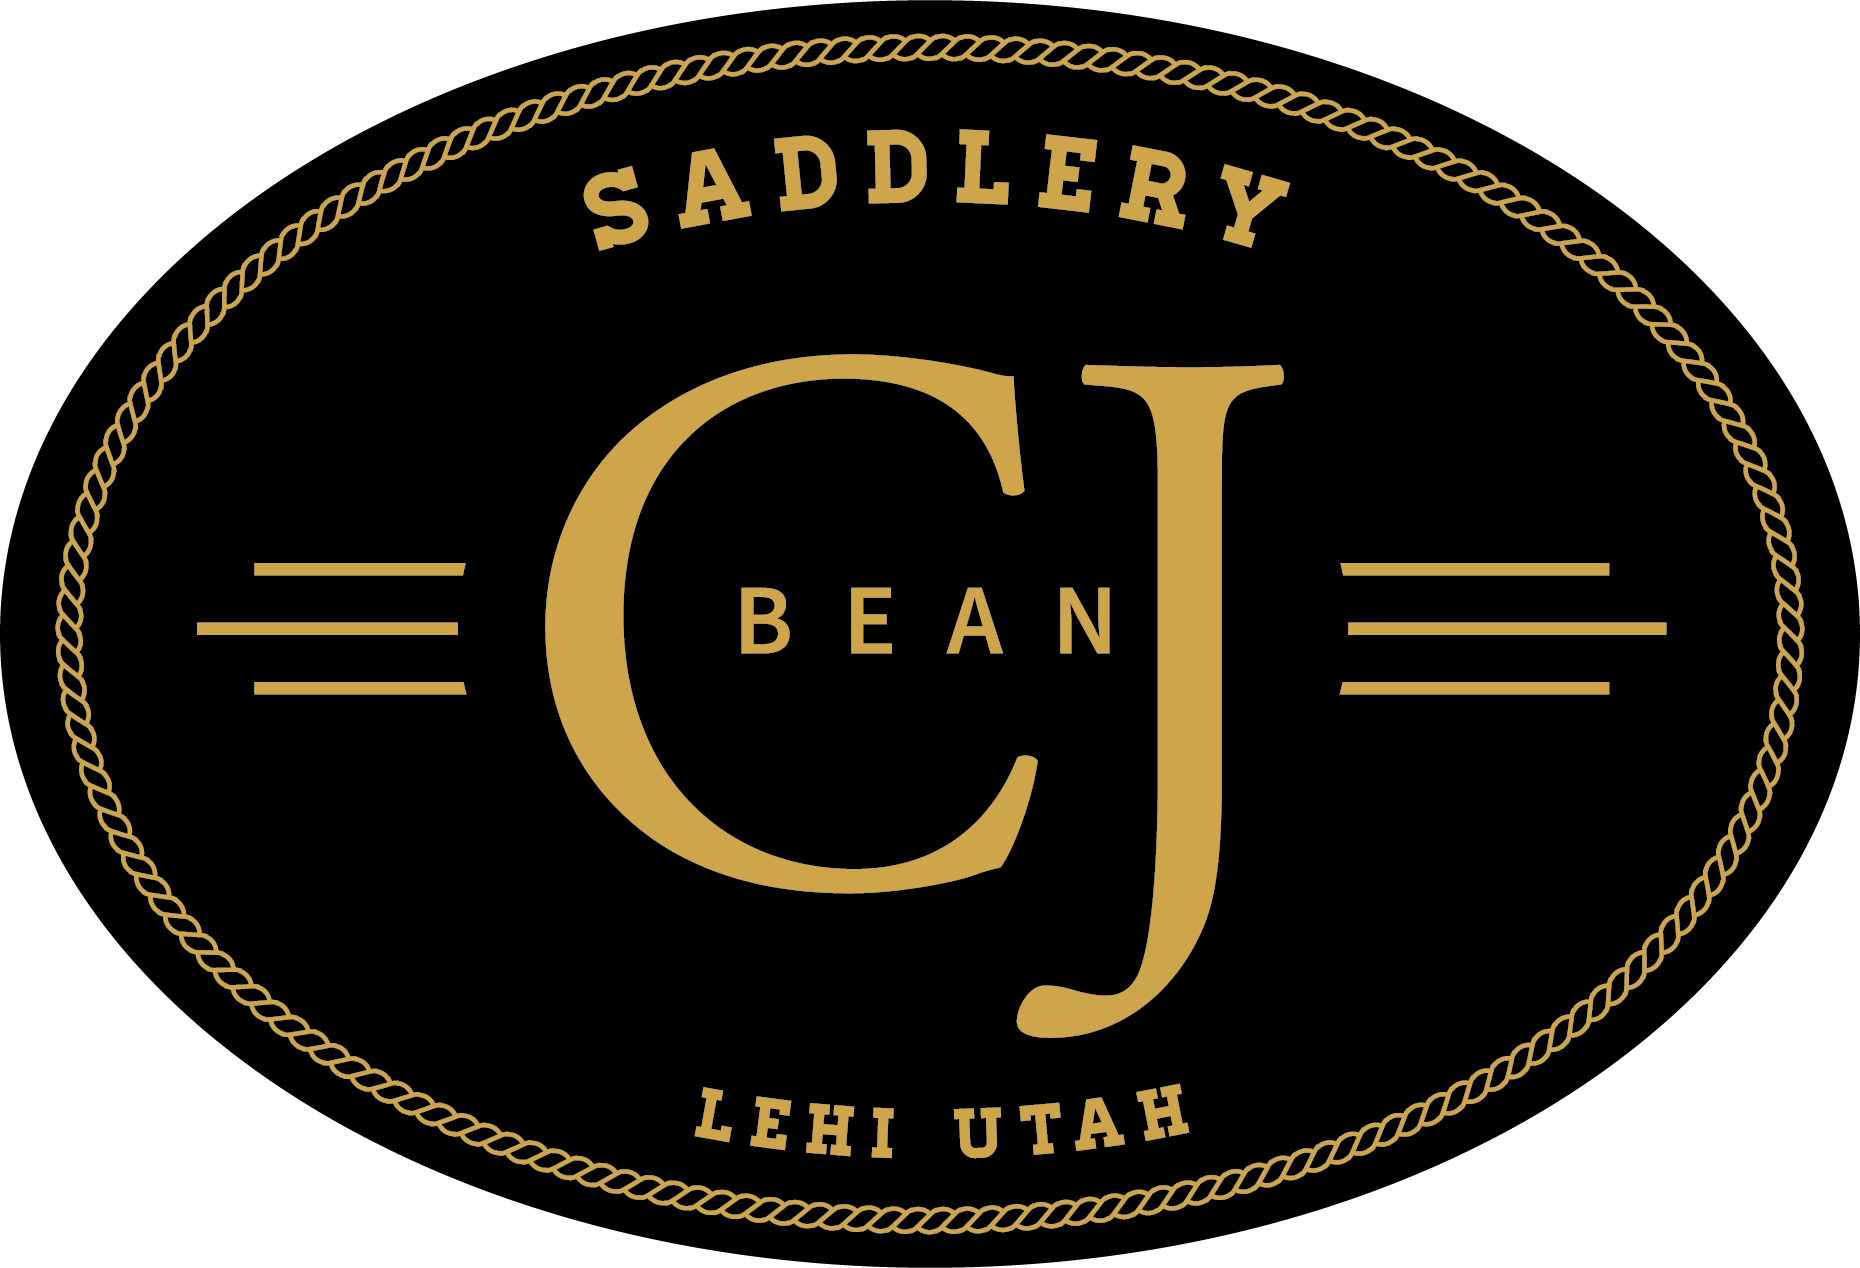 CJ Bean Saddlery